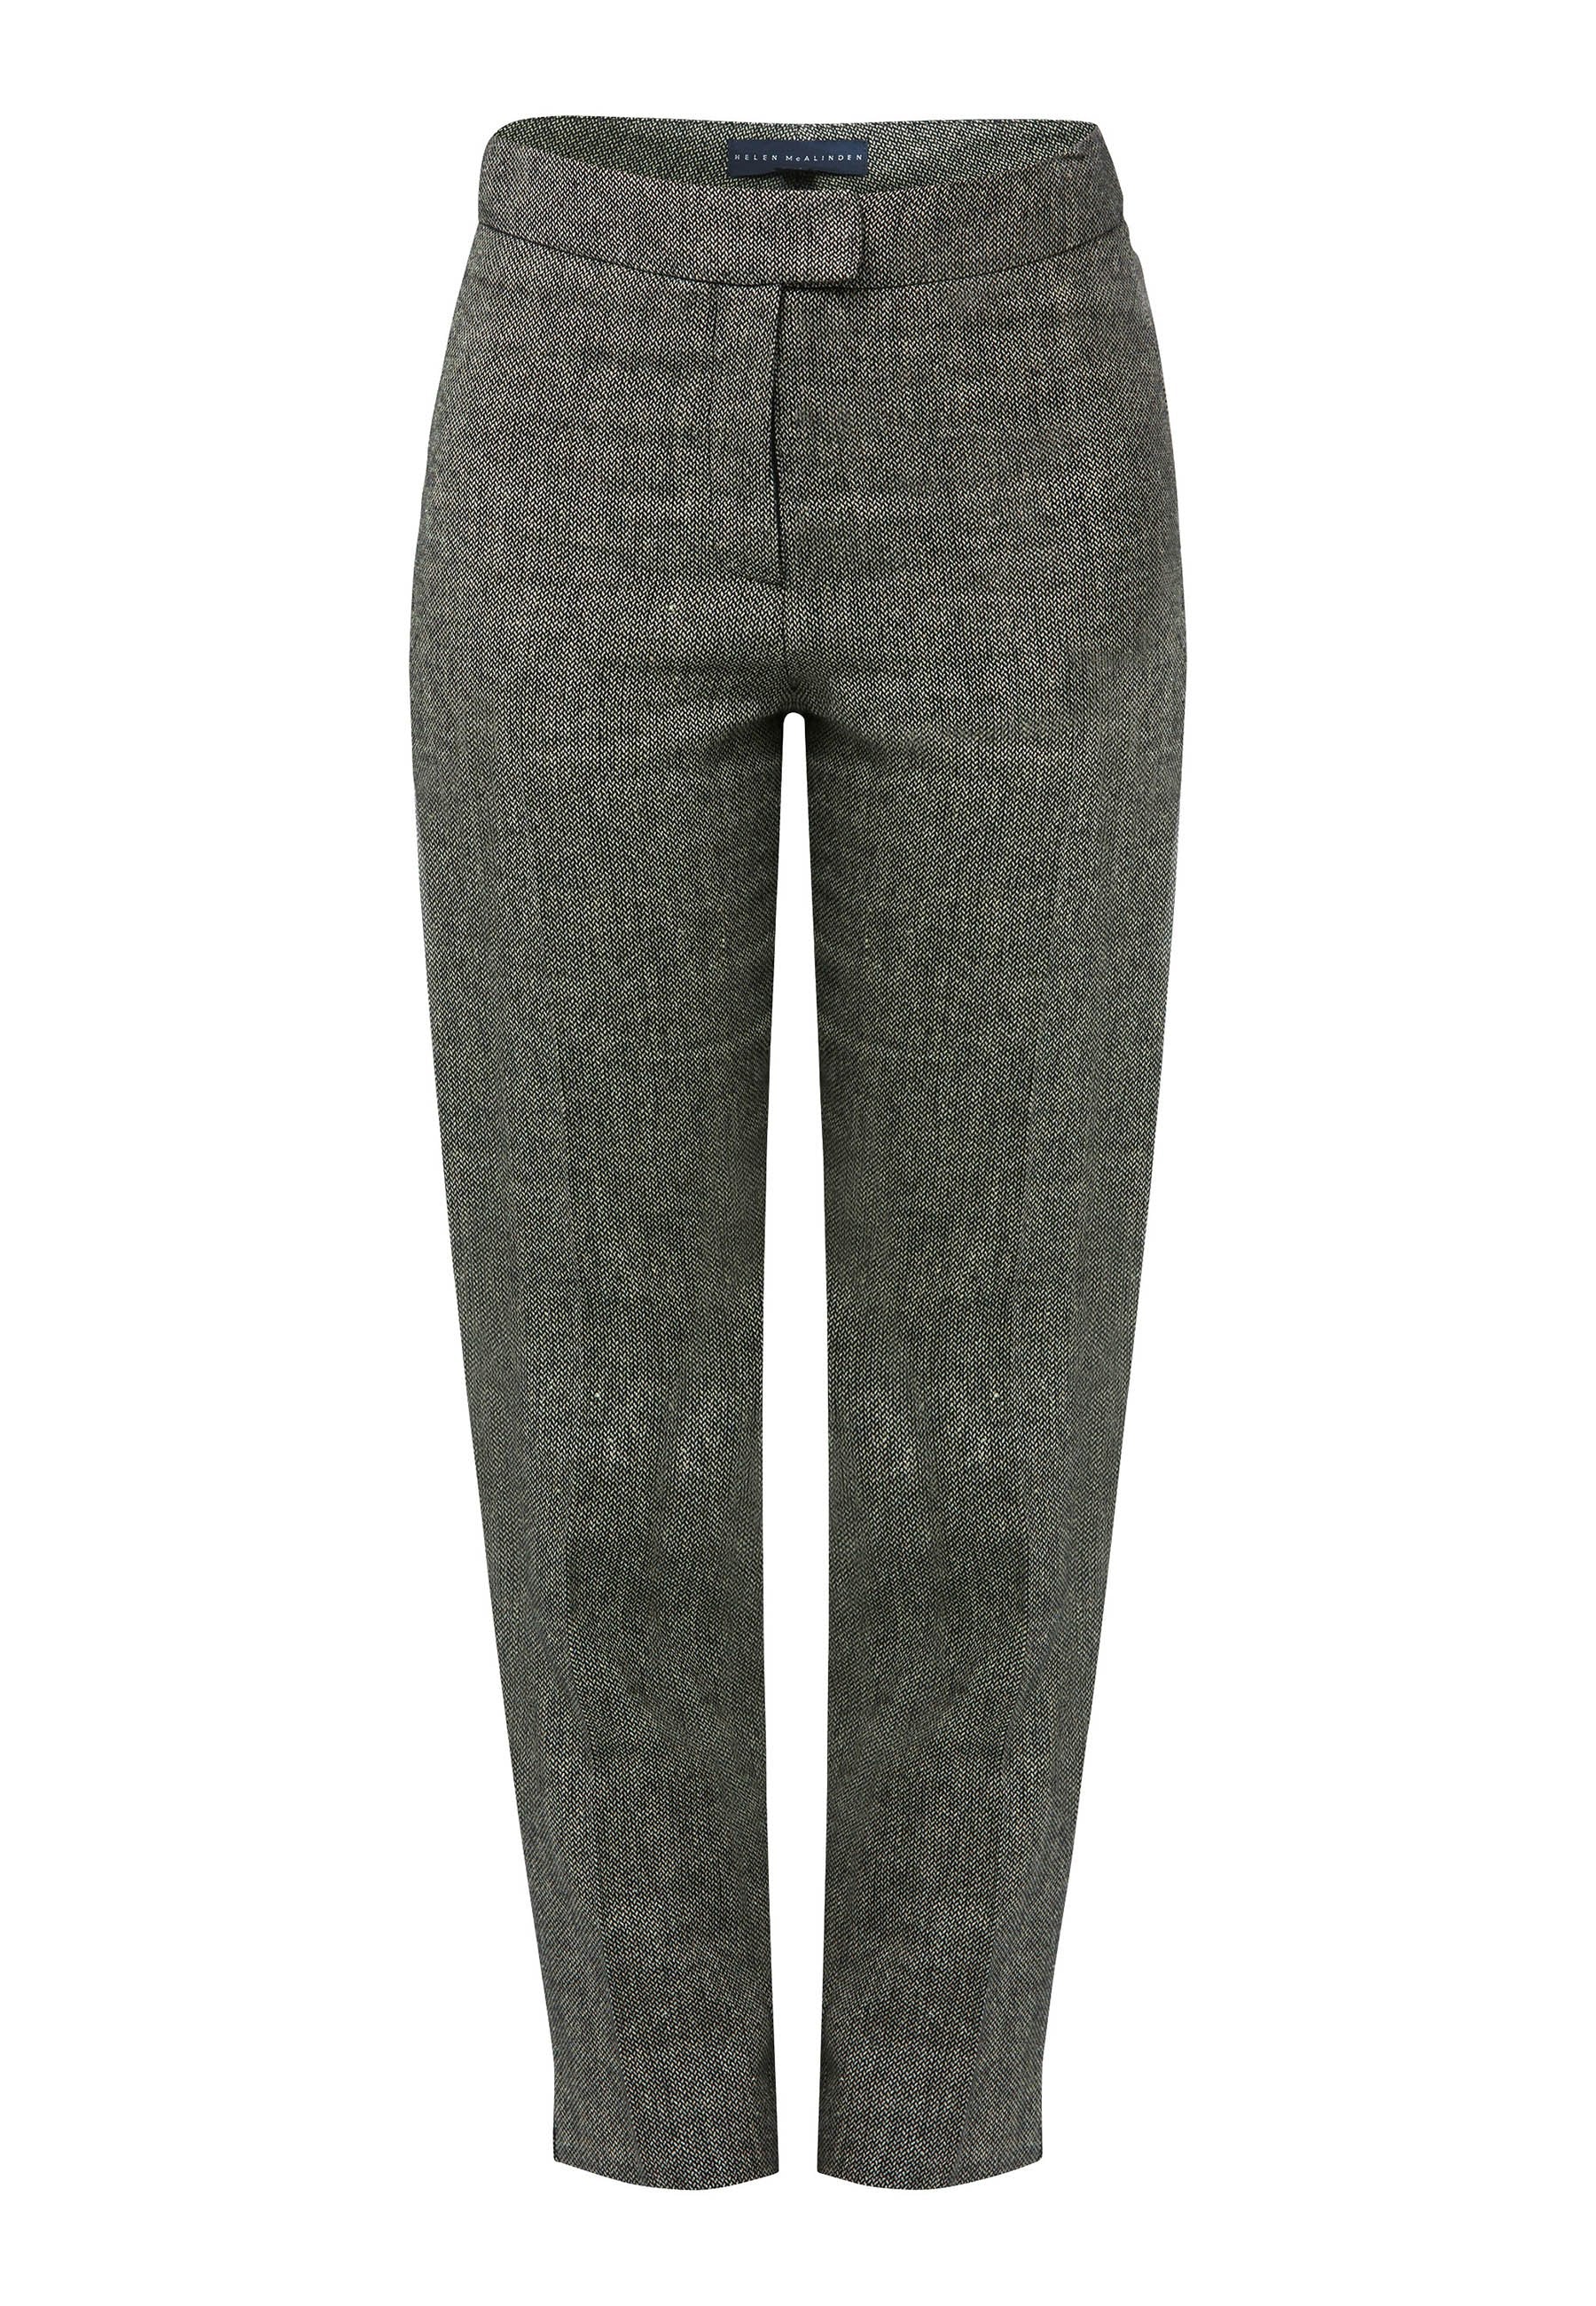 Massimo Dutti women wool tweed Pleated Knit trousers tapered leg Career sz  6 | eBay